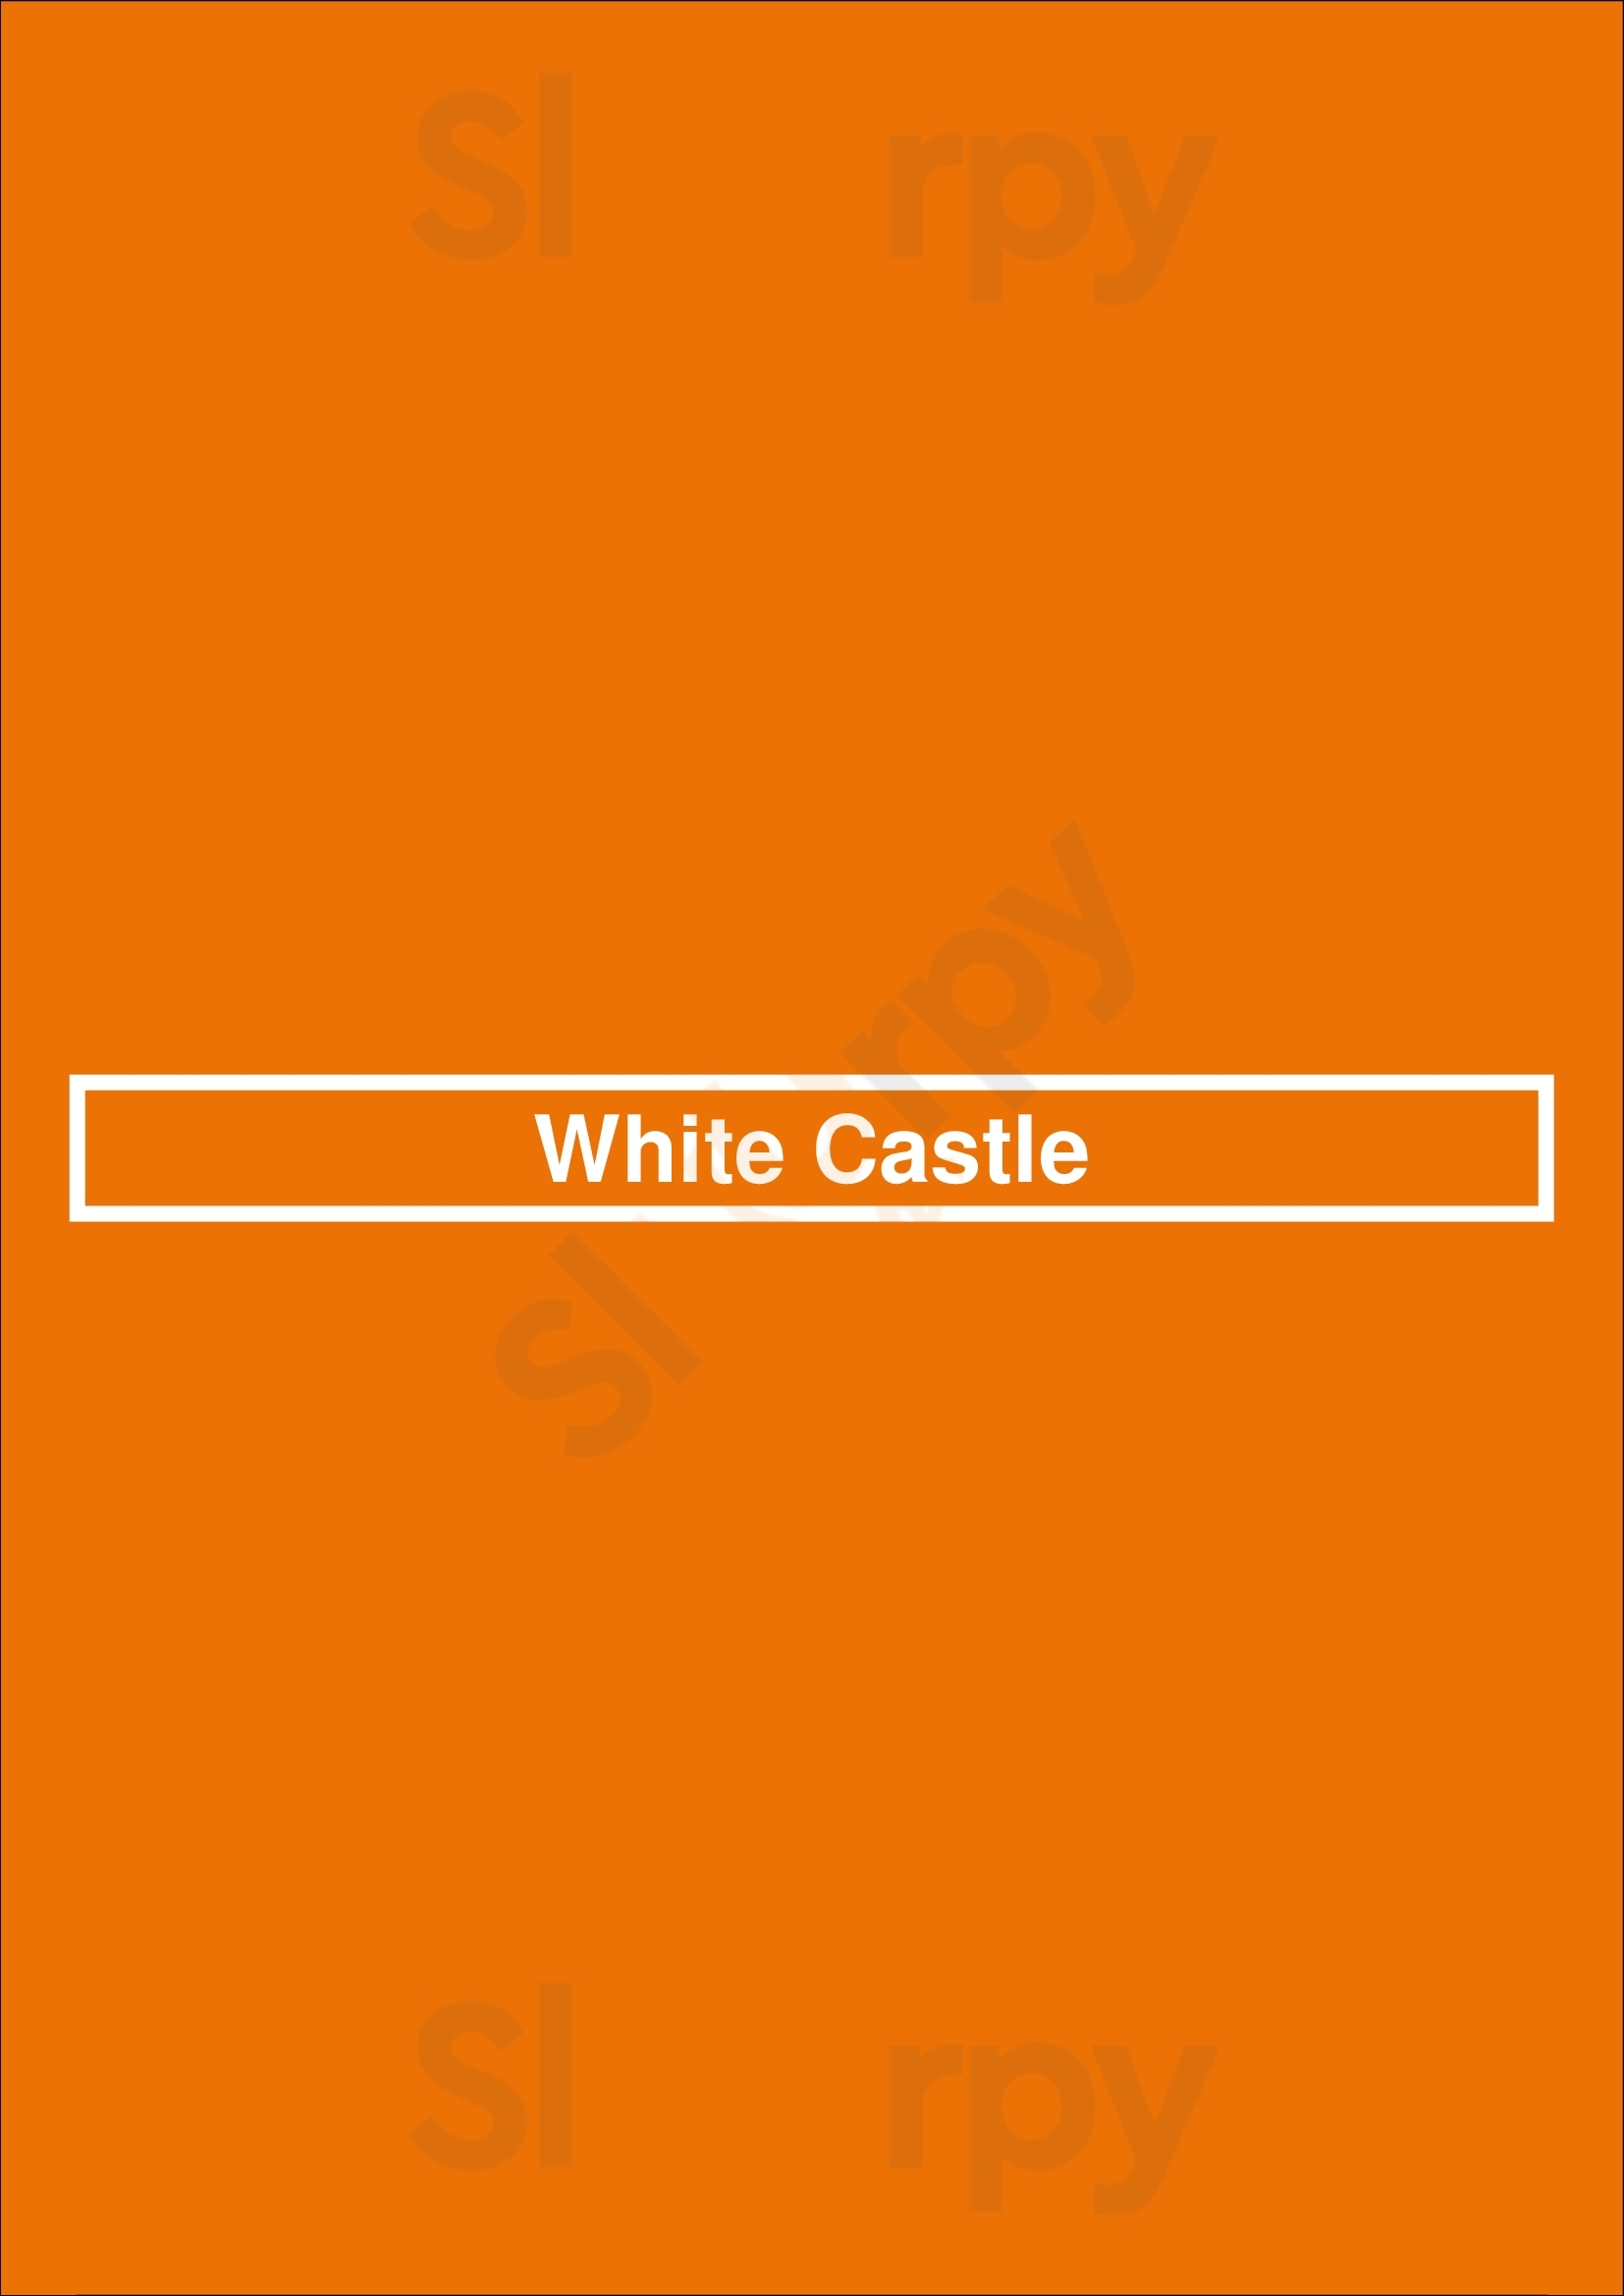 White Castle Homewood Menu - 1